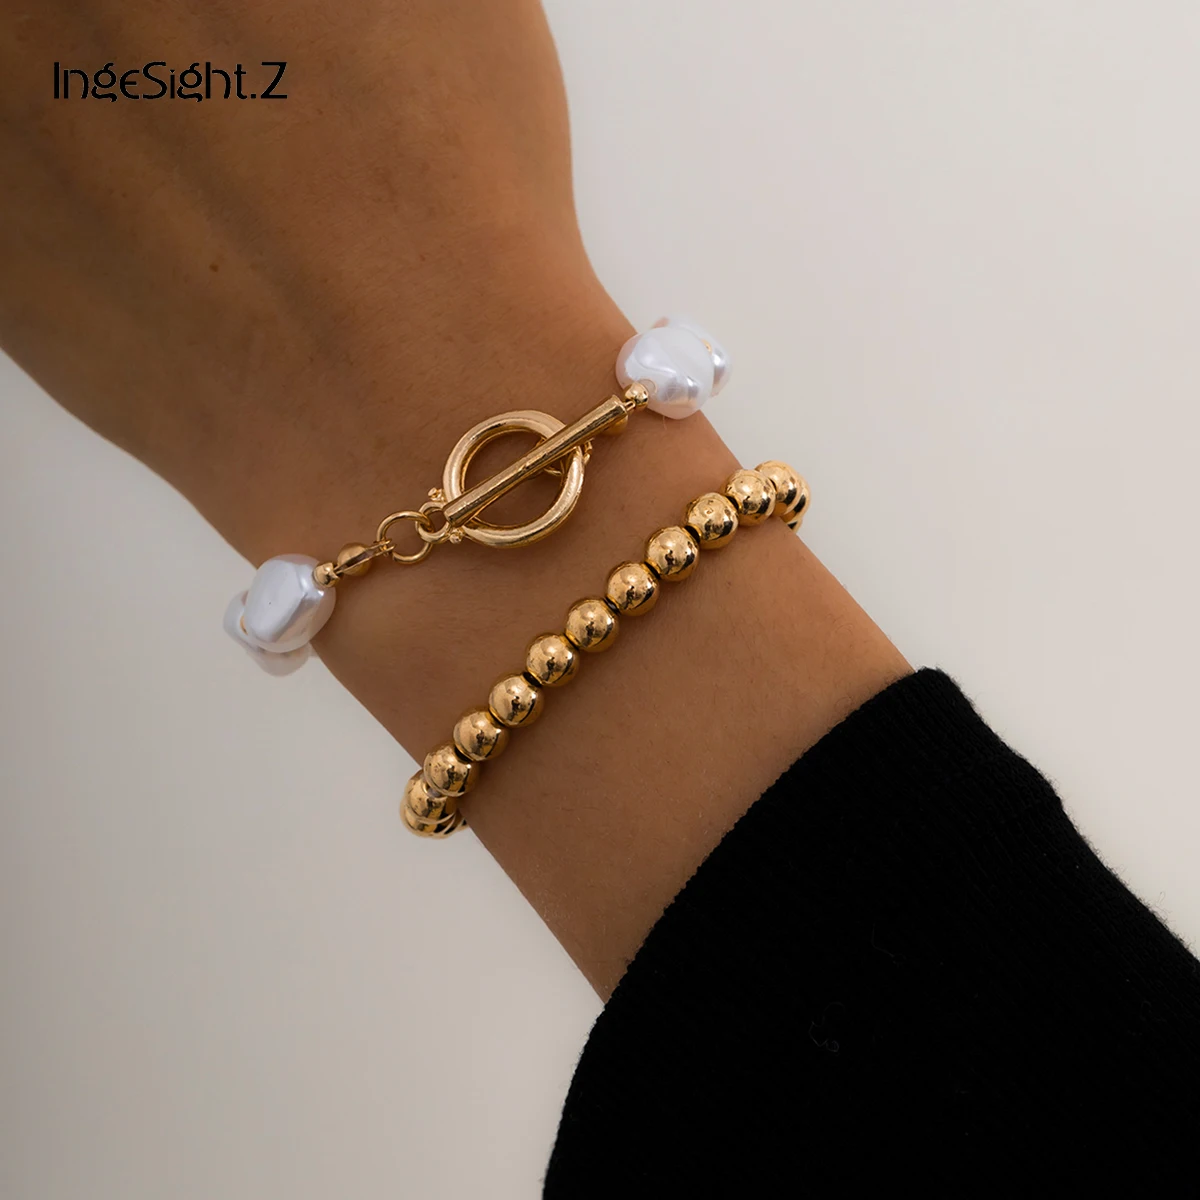 

IngeSight.Z 2Pcs/Set Imitation Pearl Chain Toggle Lasso Bracelets Plastic Beaded Chain Wrist Bracelets Bangles for Women Jewelry